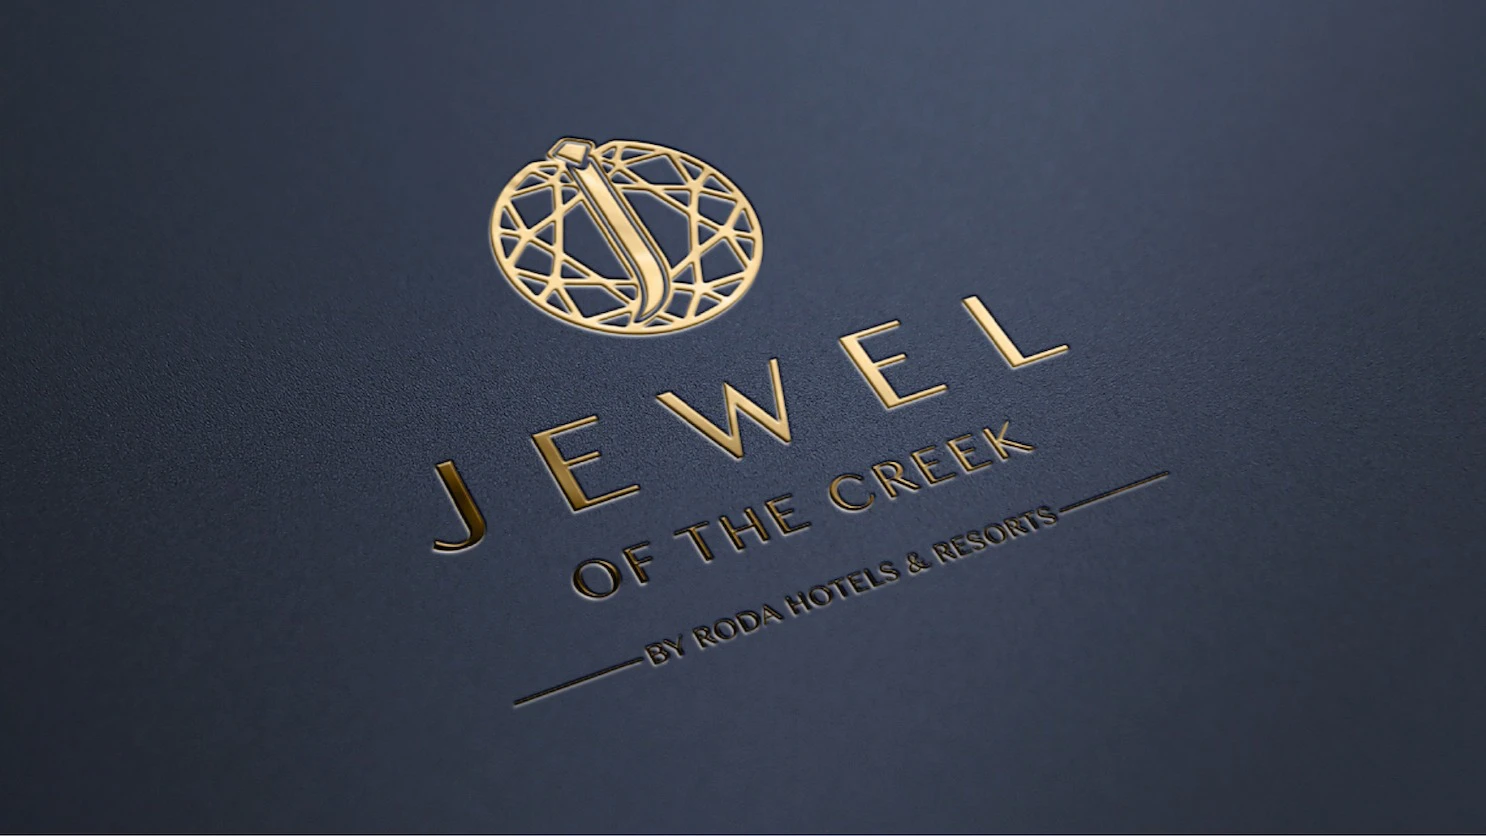 Jewel of the Creek - brand identity proposal - banner